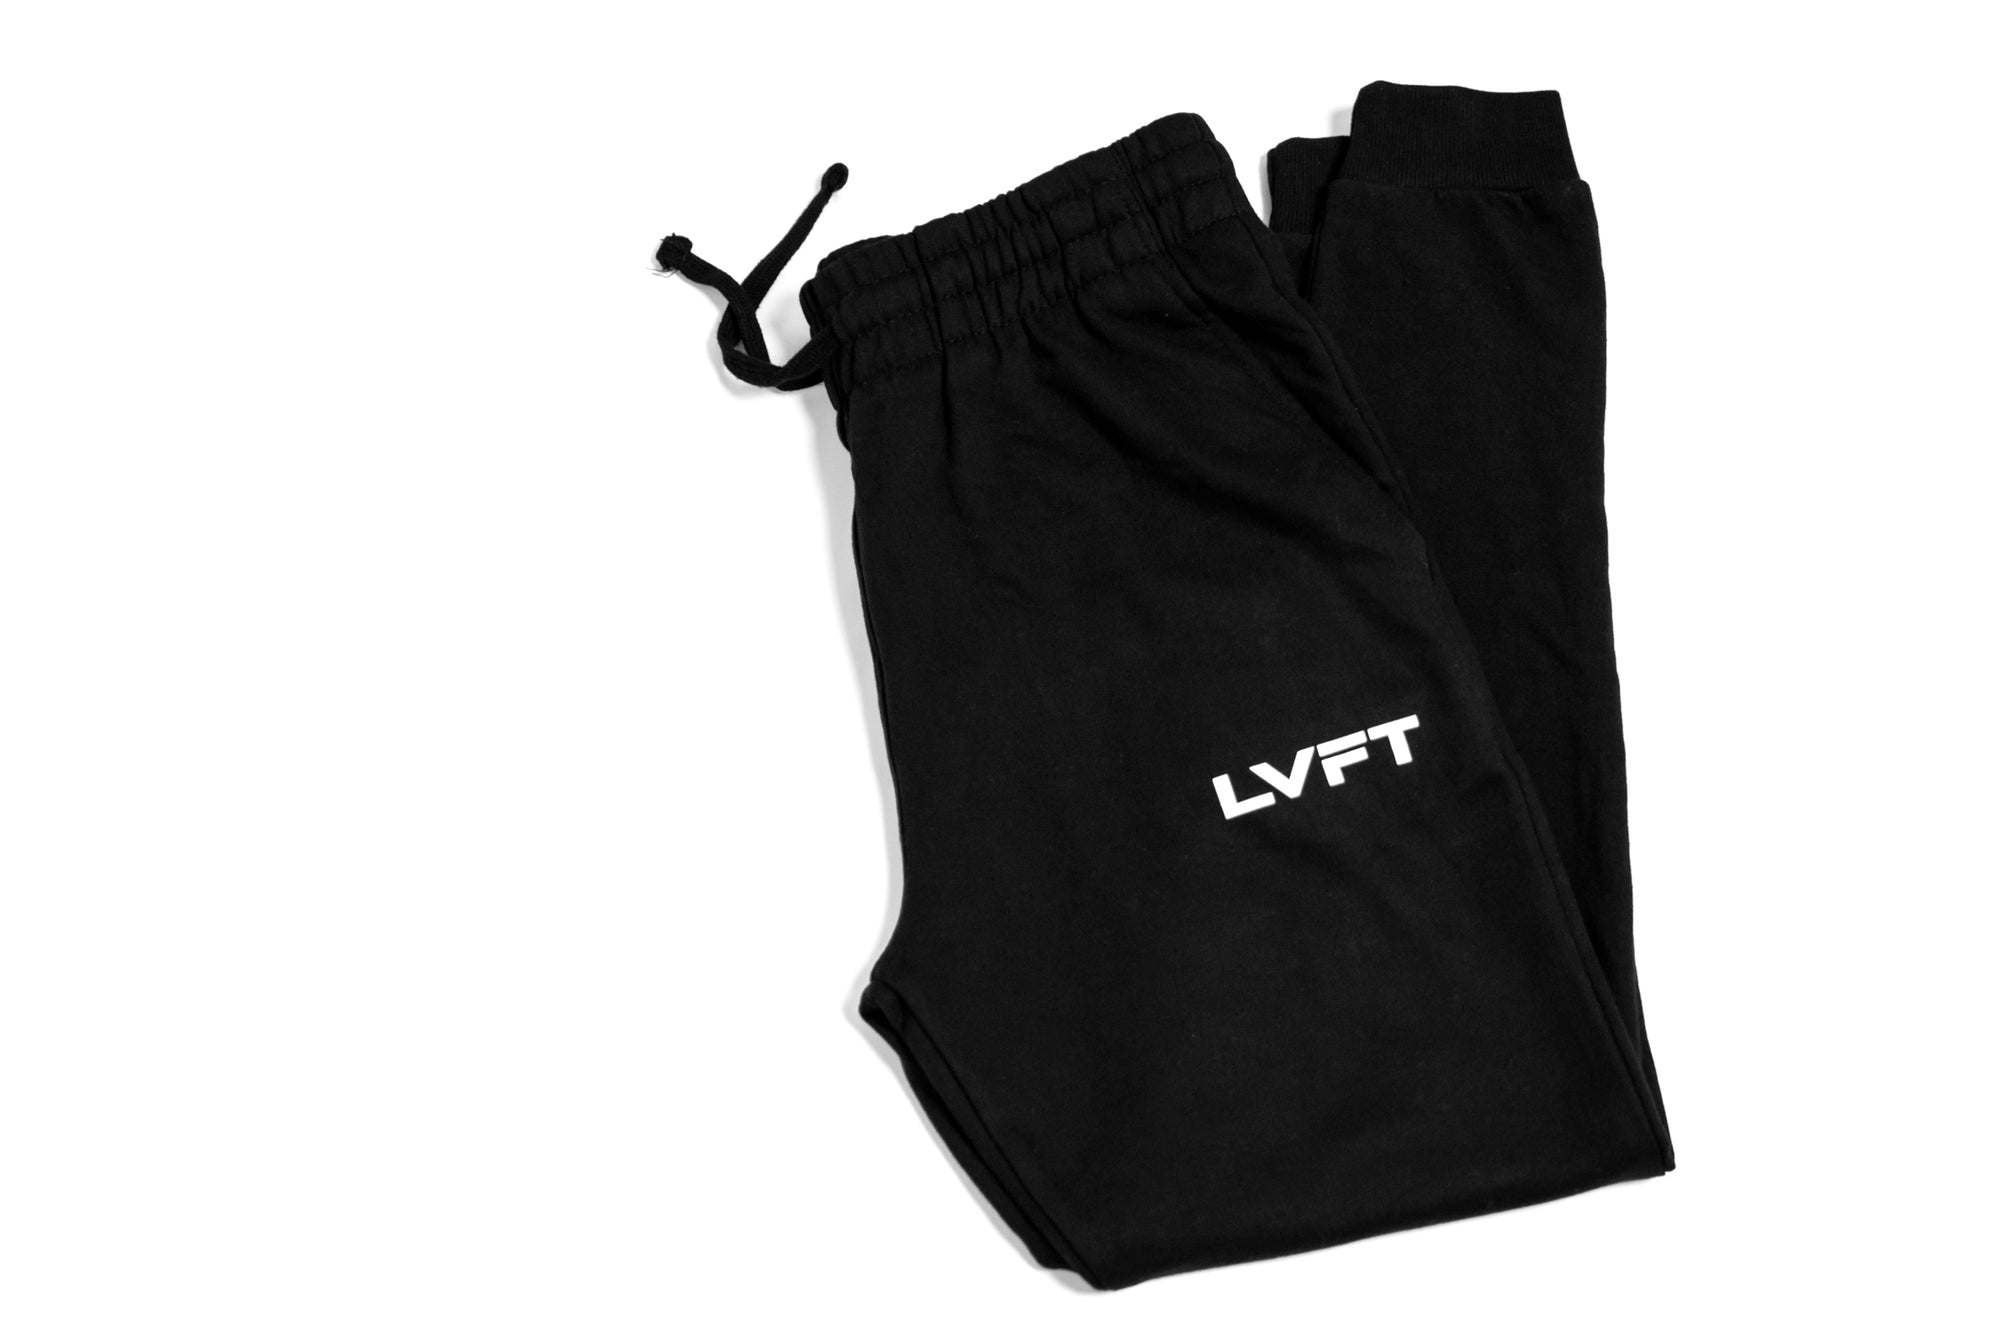 Slate Sweat Pants - Black / Red - Live Fit. Apparel